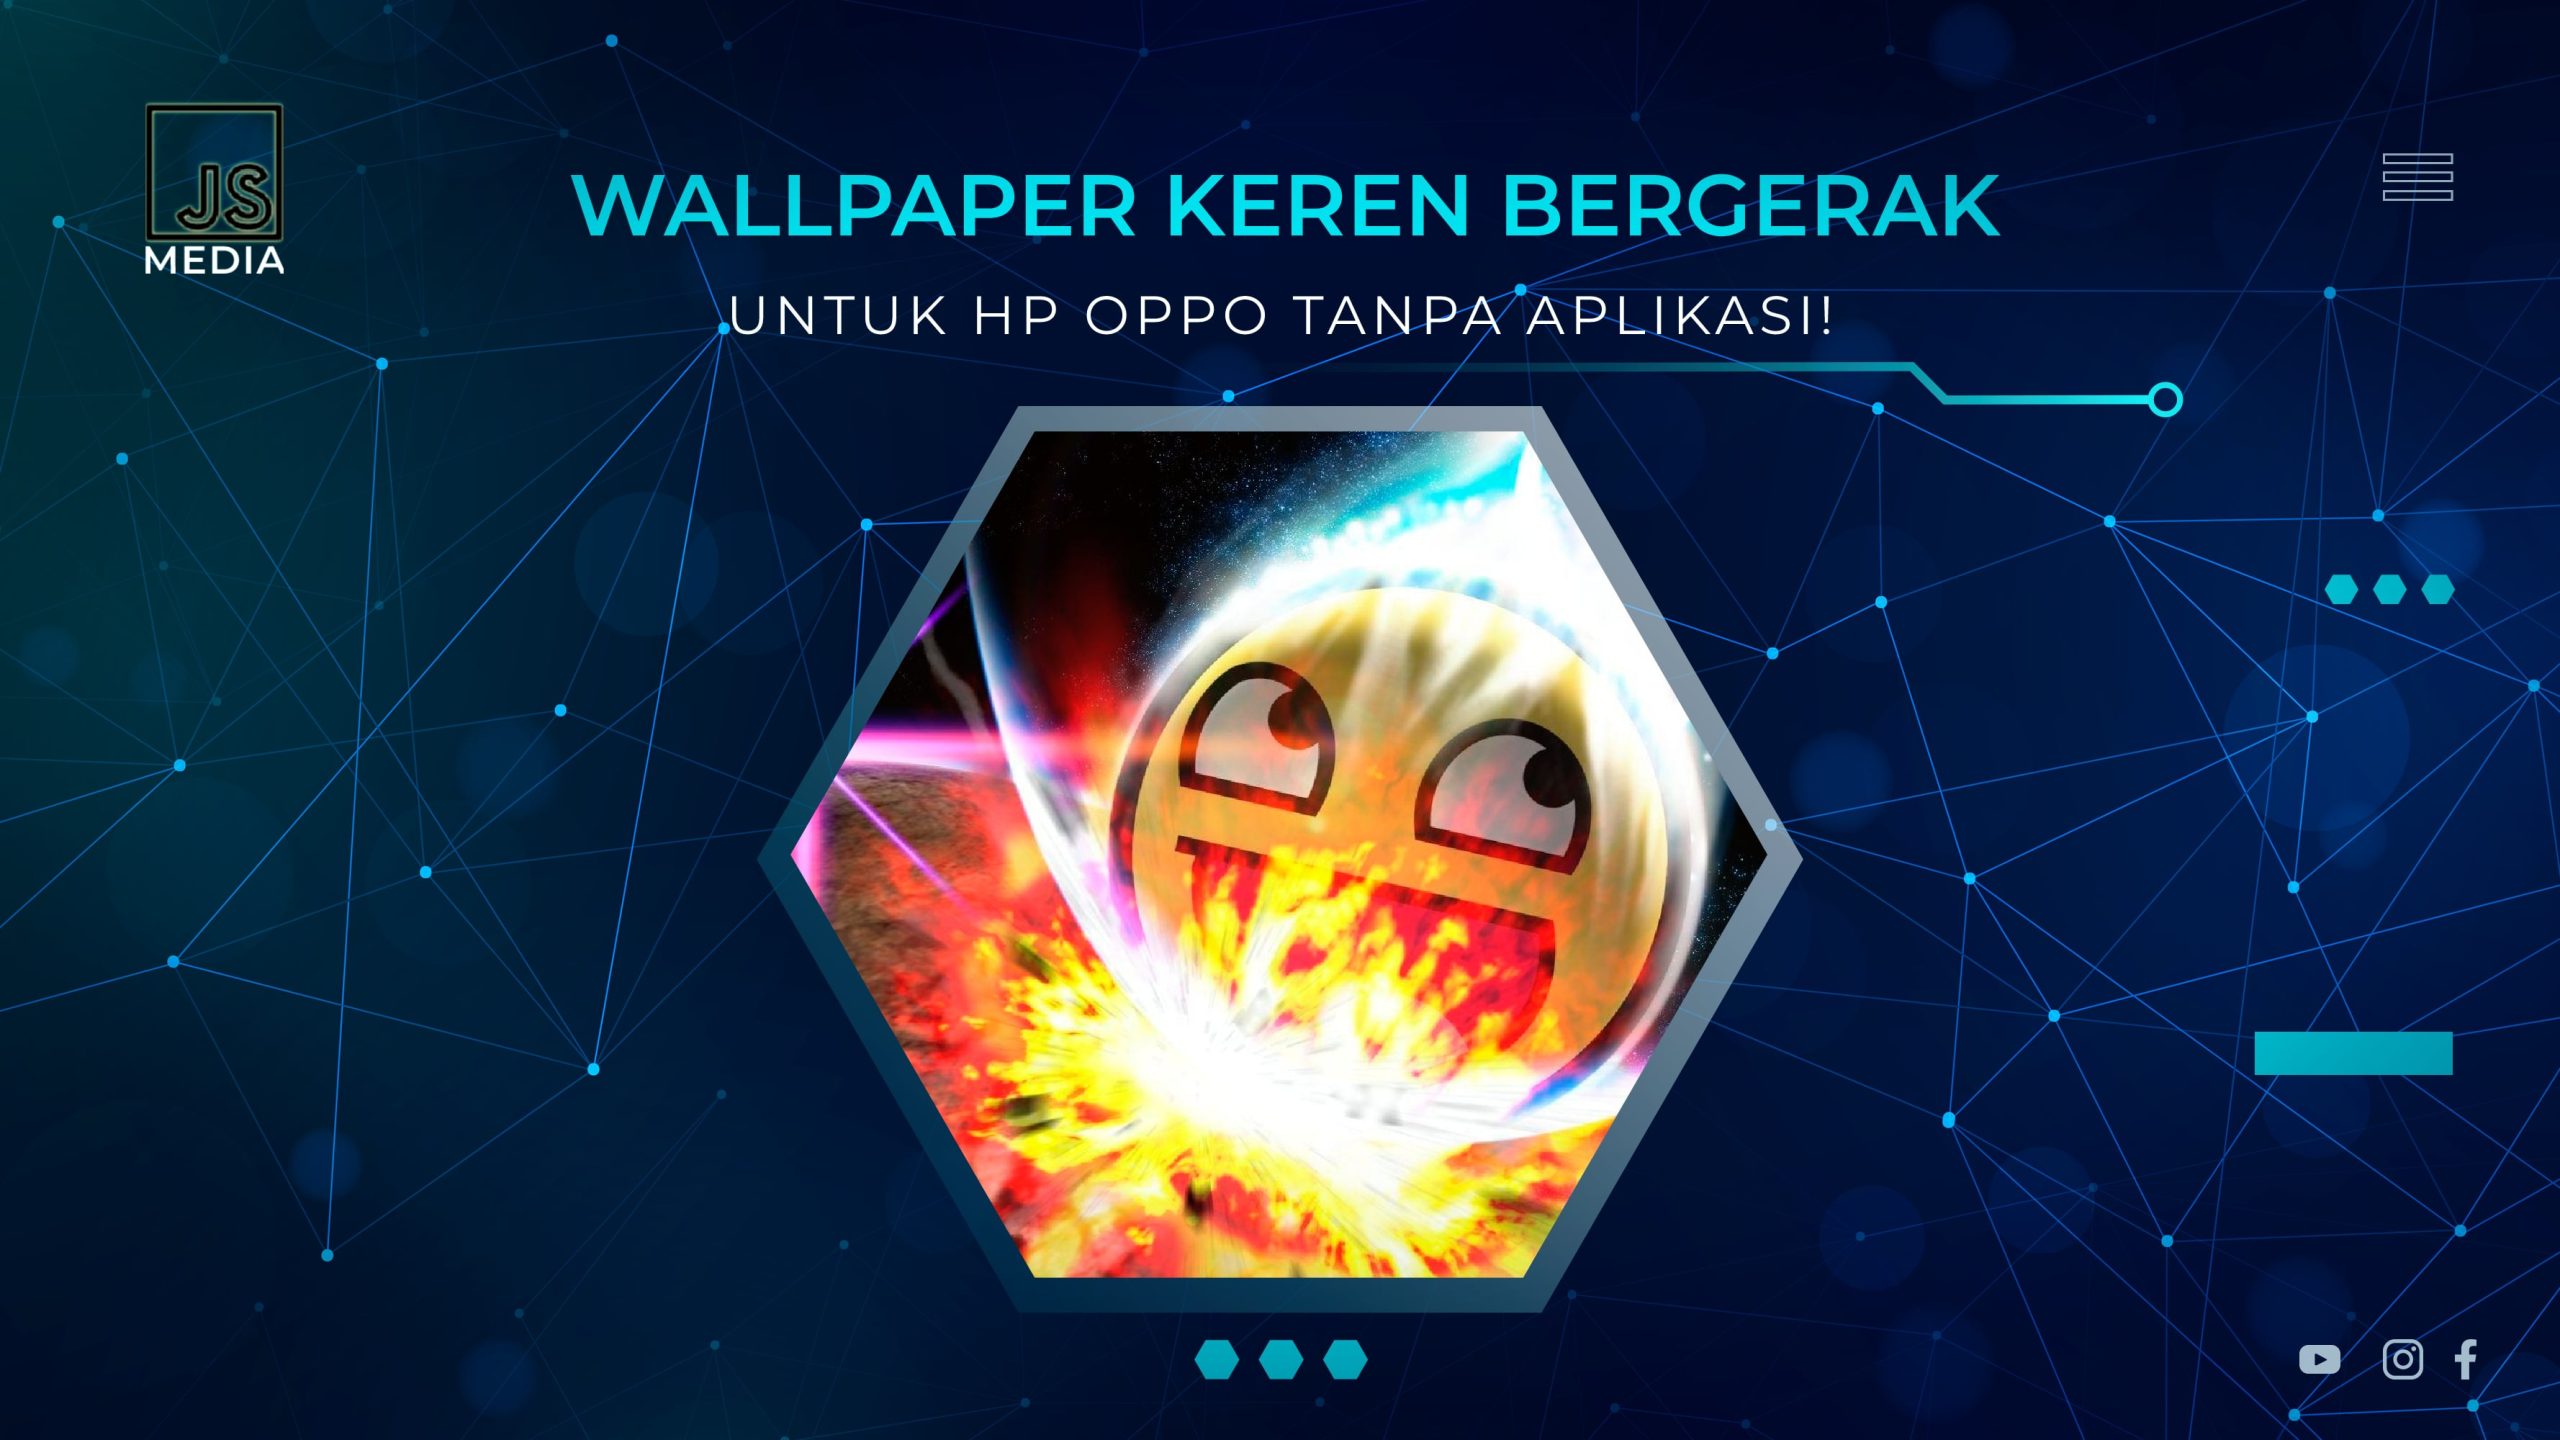 Wallpaper Keren Bergerak untuk HP Oppo Tanpa Aplikasi!